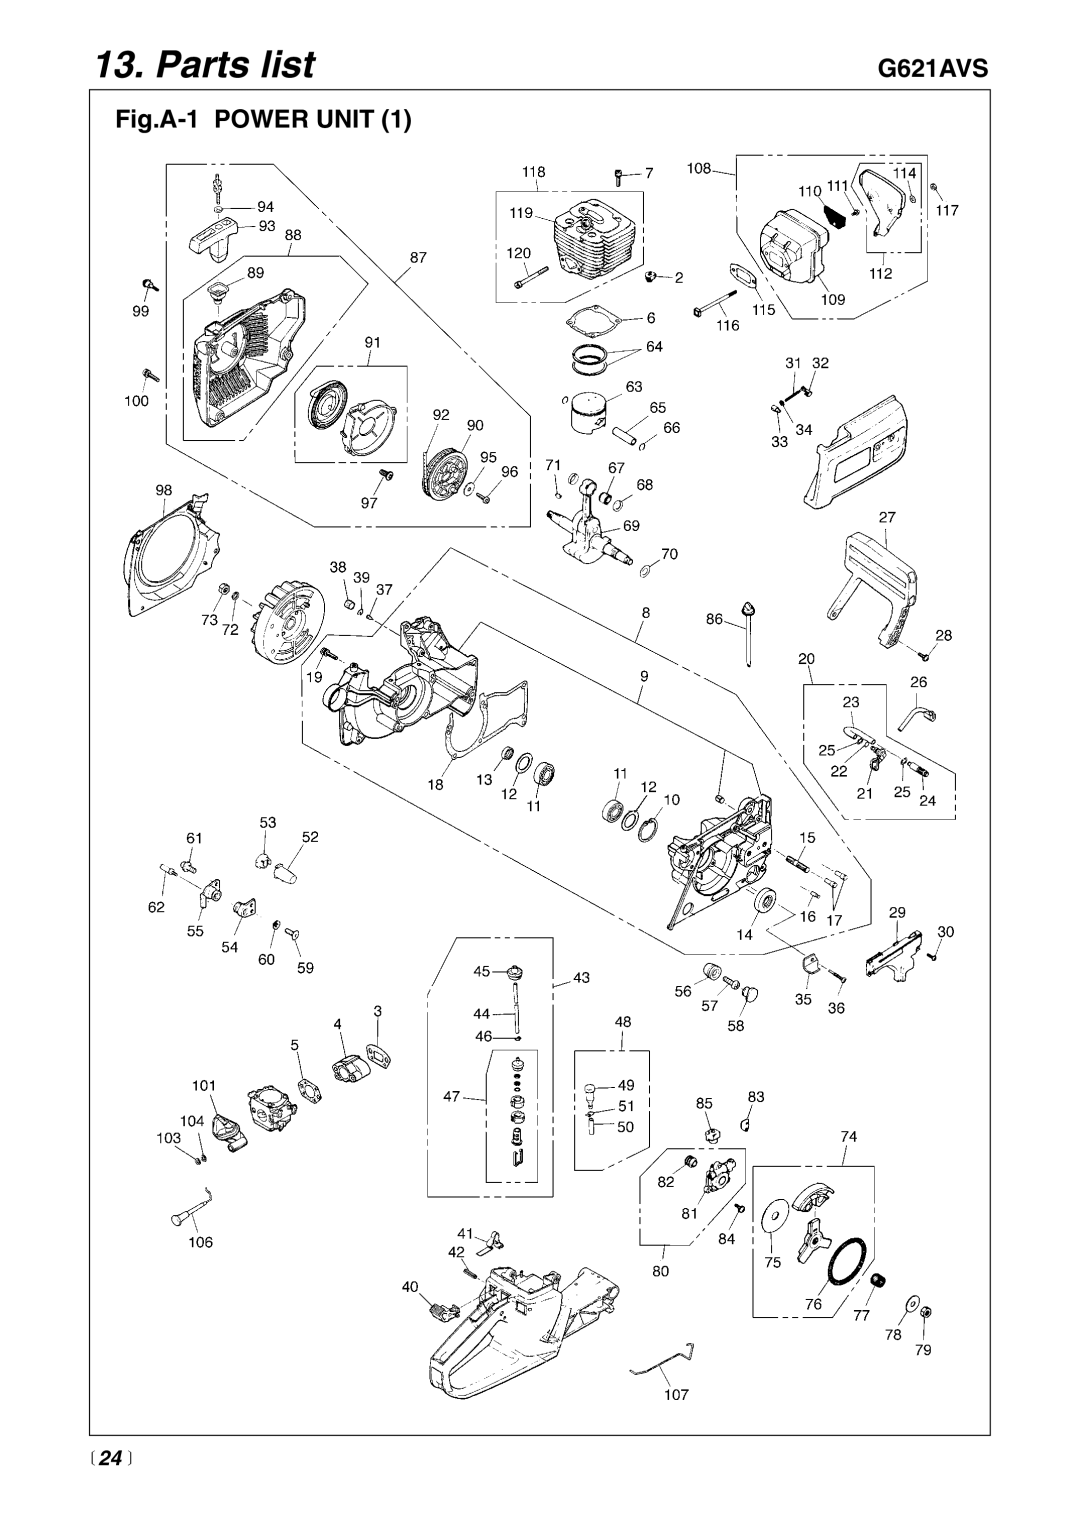 RedMax G621AVS manual Fig.A-1 POWER UNIT,  24 , Parts list 